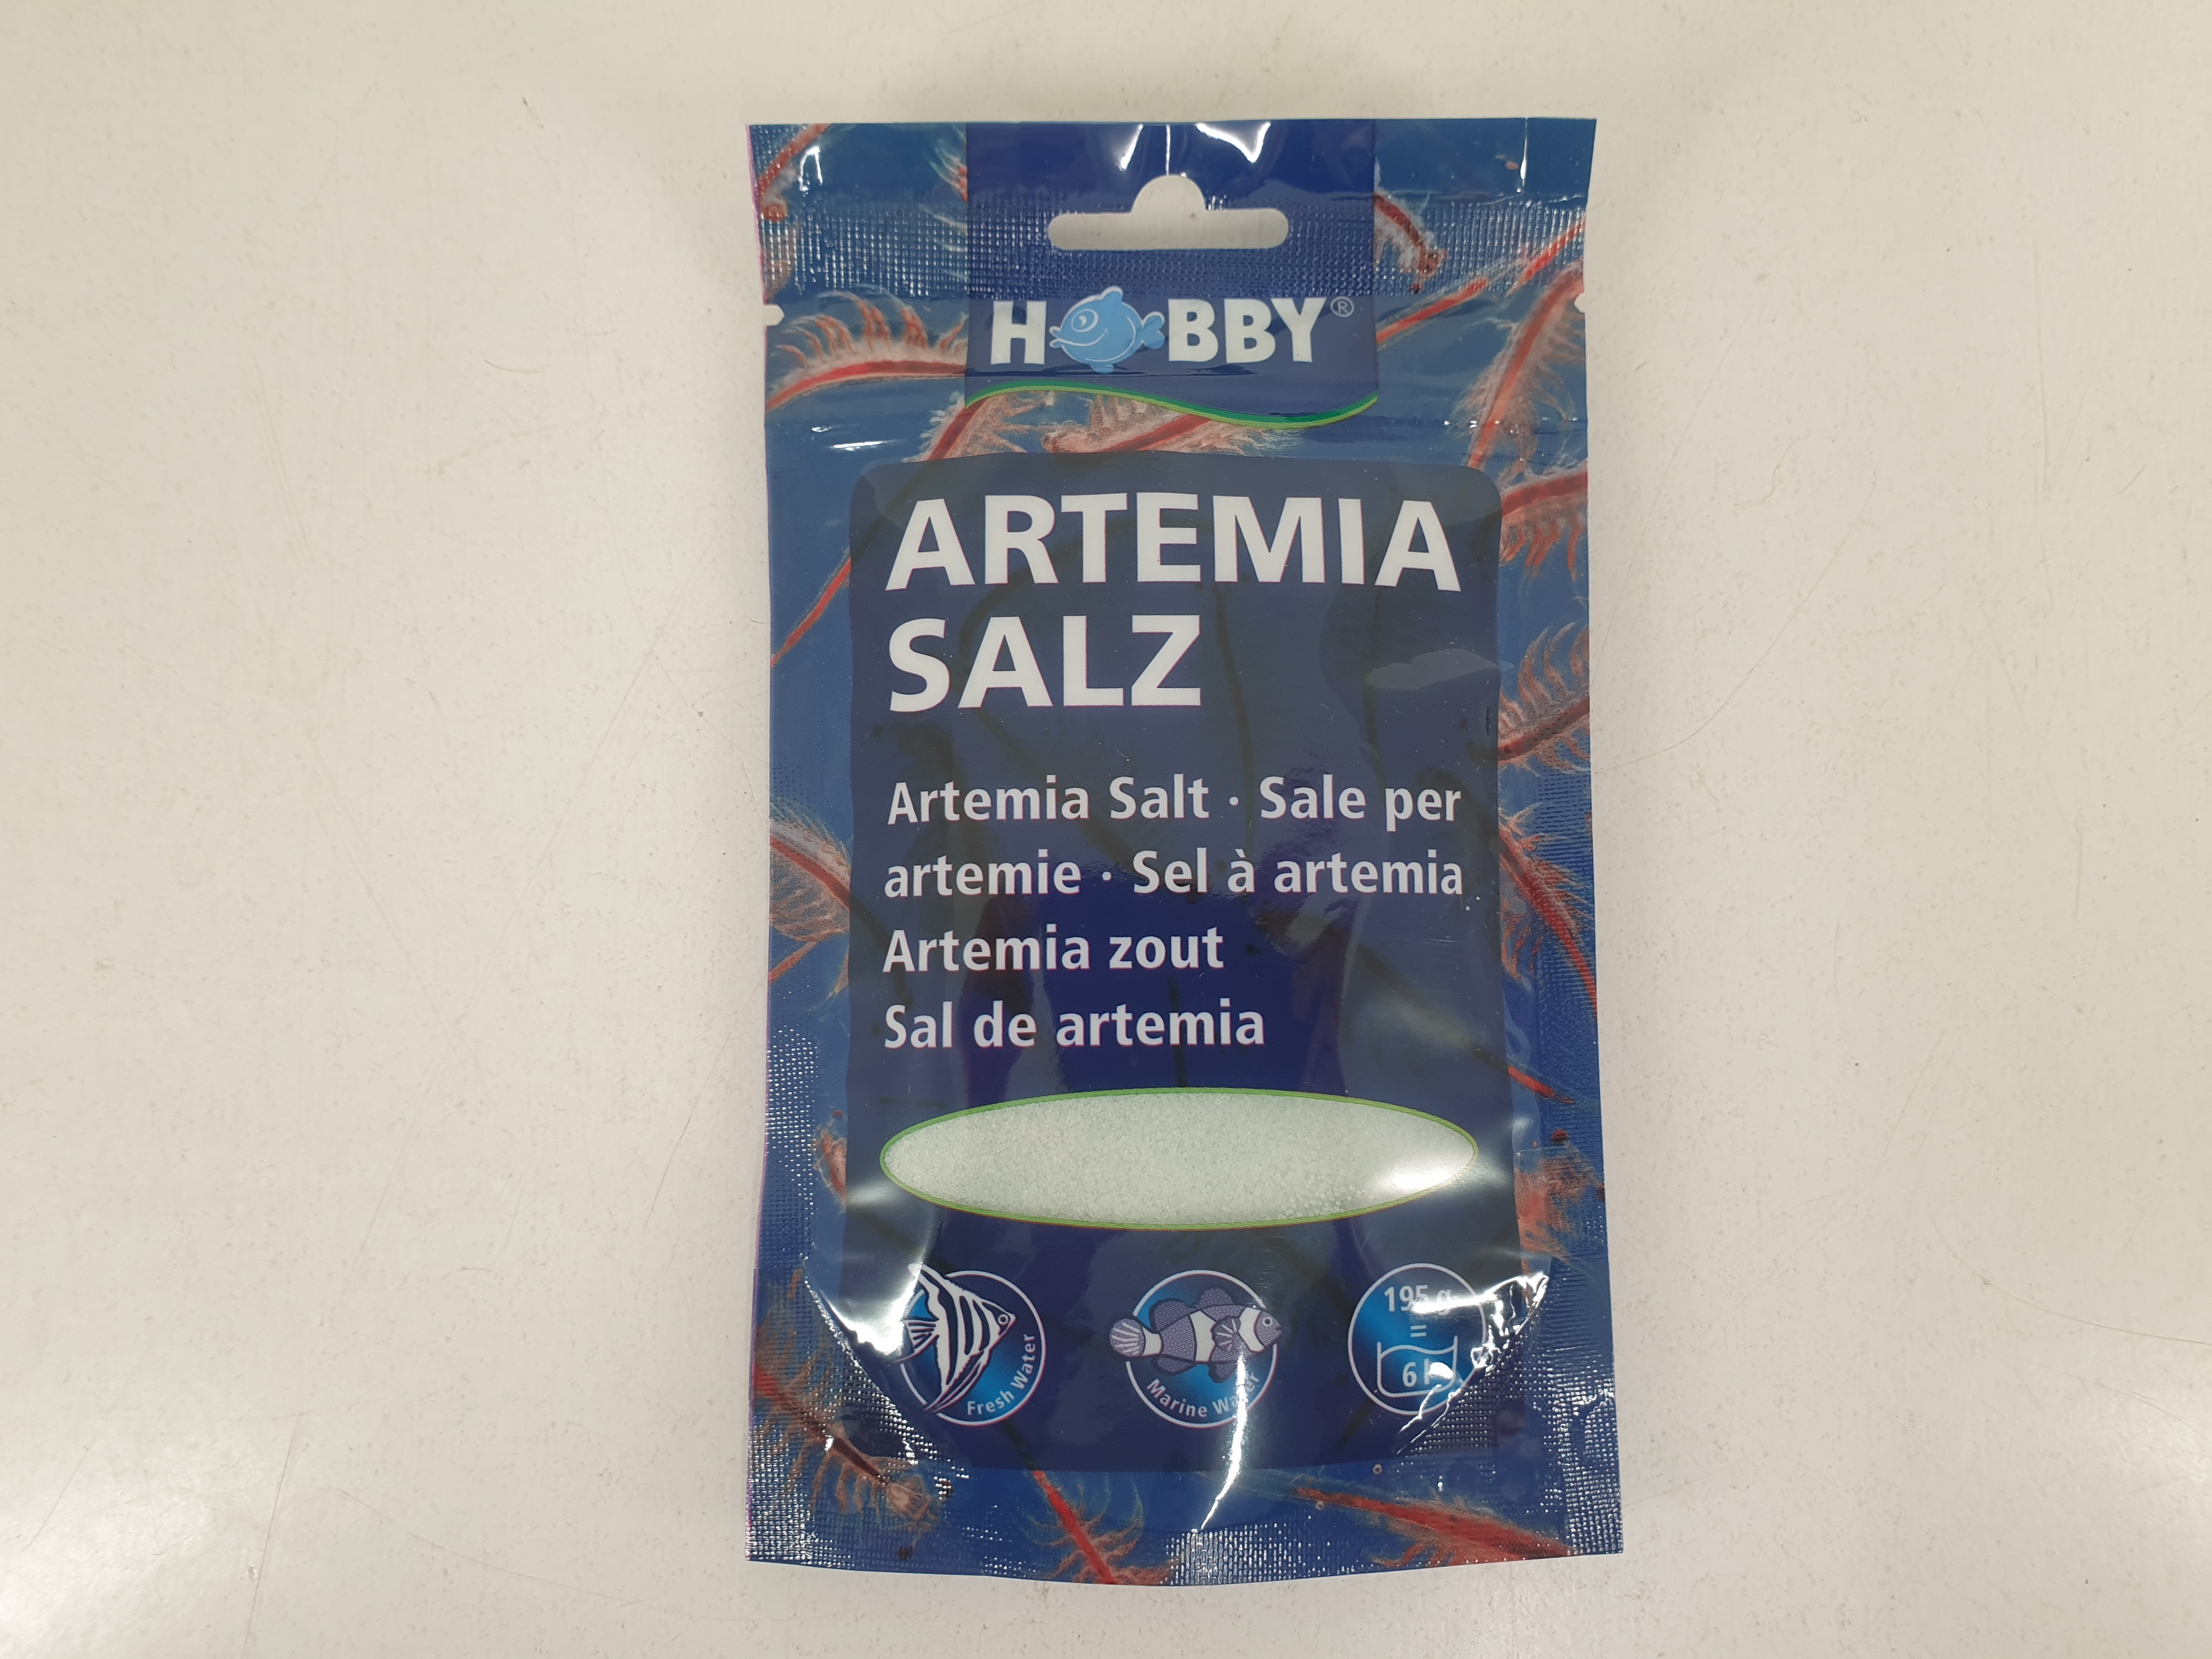 Hobby Artemia Salz - Spezial-Salz für die Aufzucht 195g